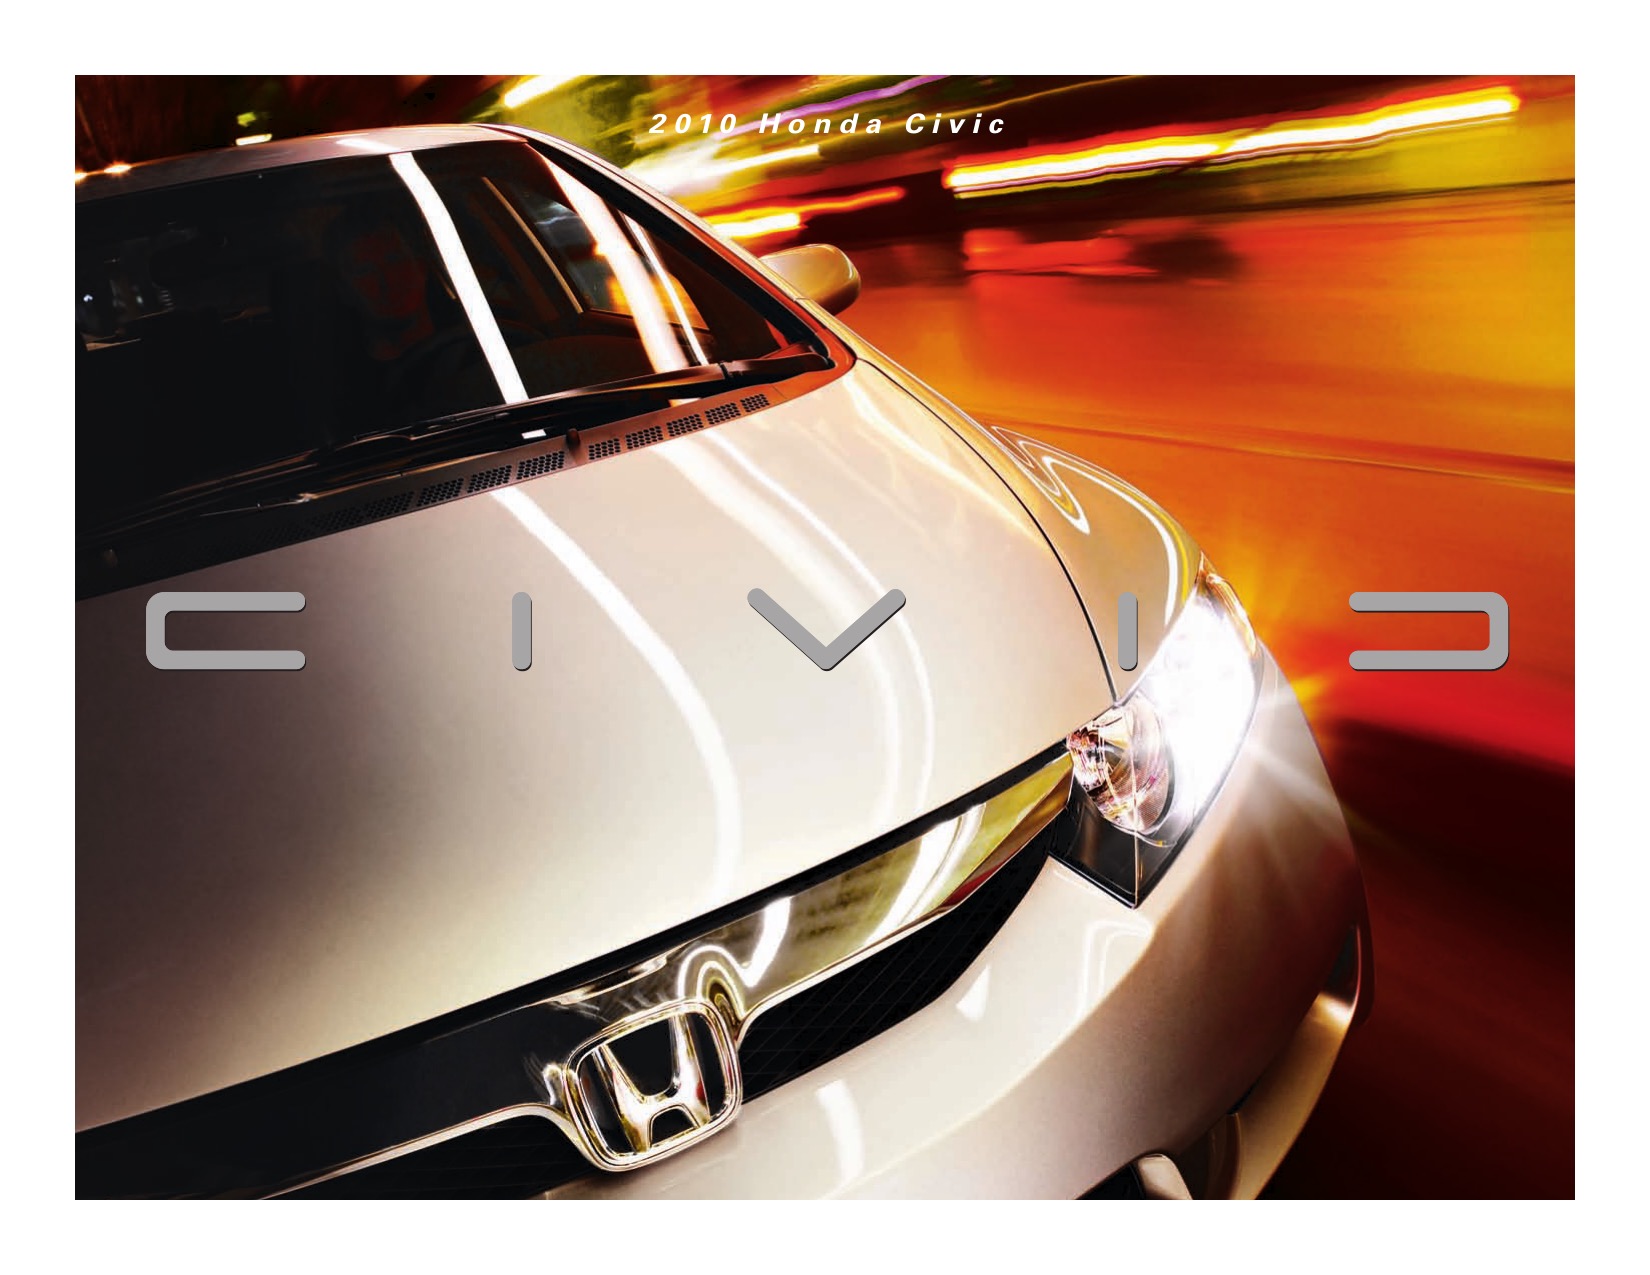 2010 Honda Civic Brochure